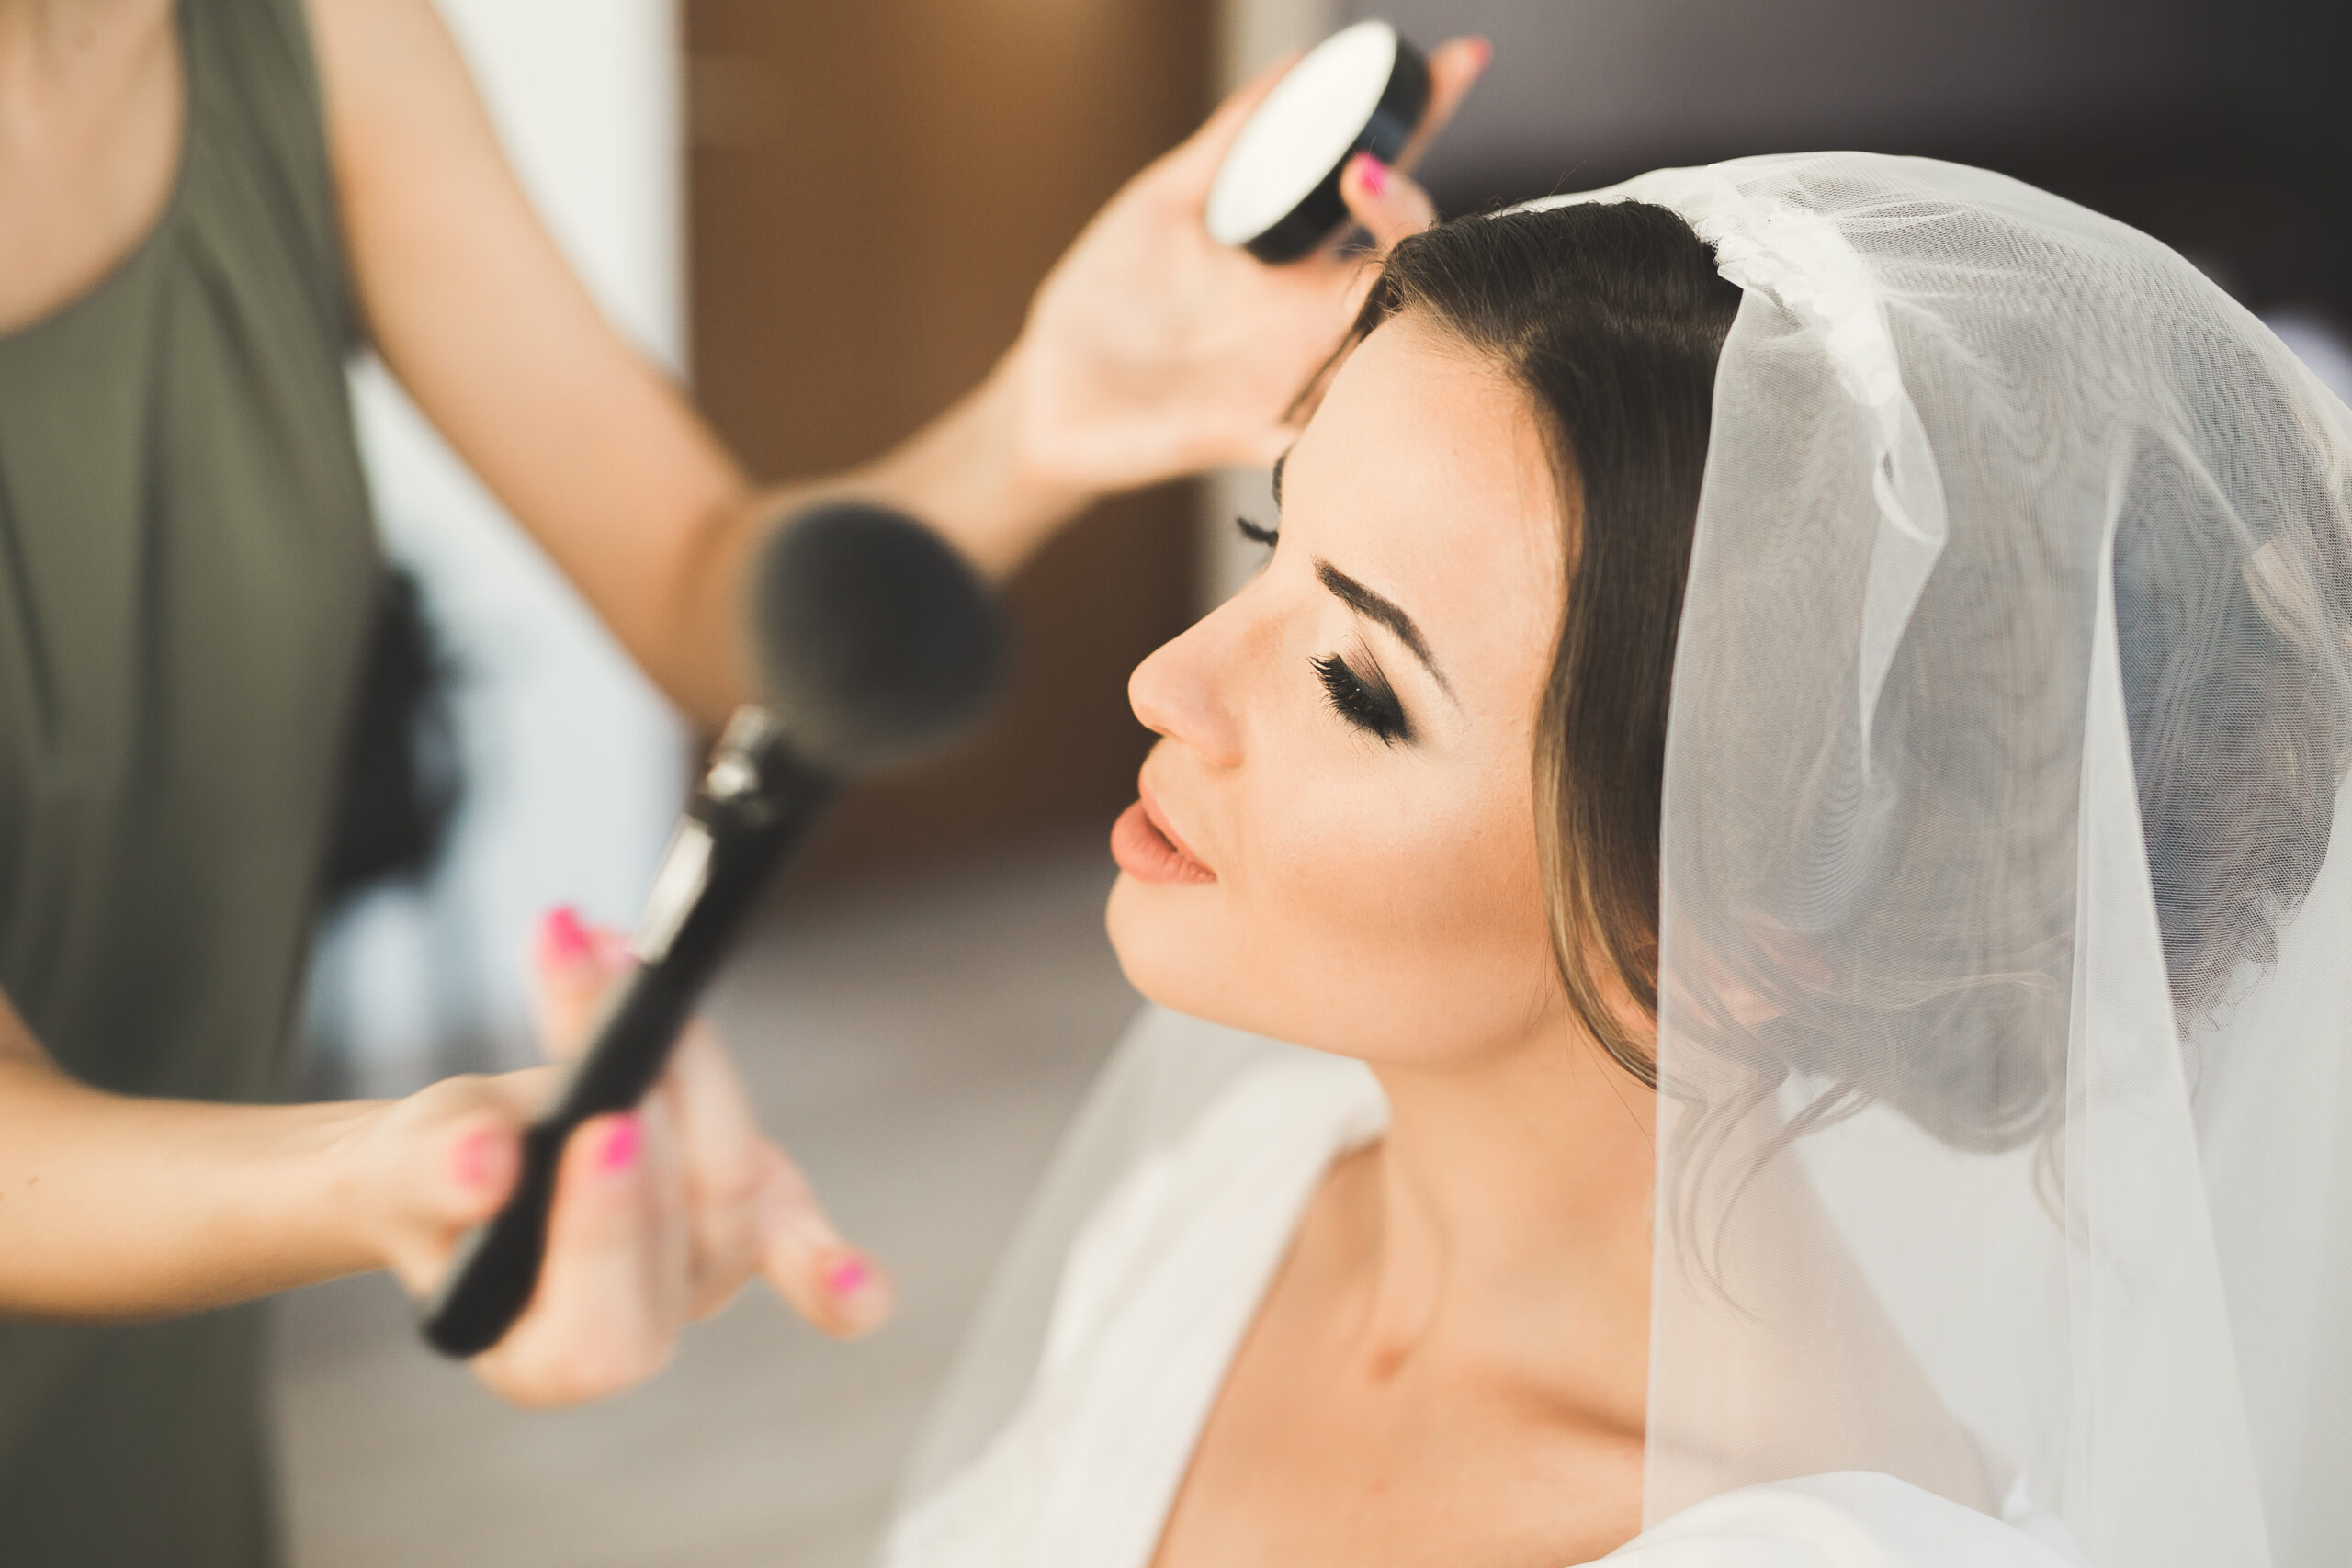 Makeup and Bridal Service in Awaken Aesthetics